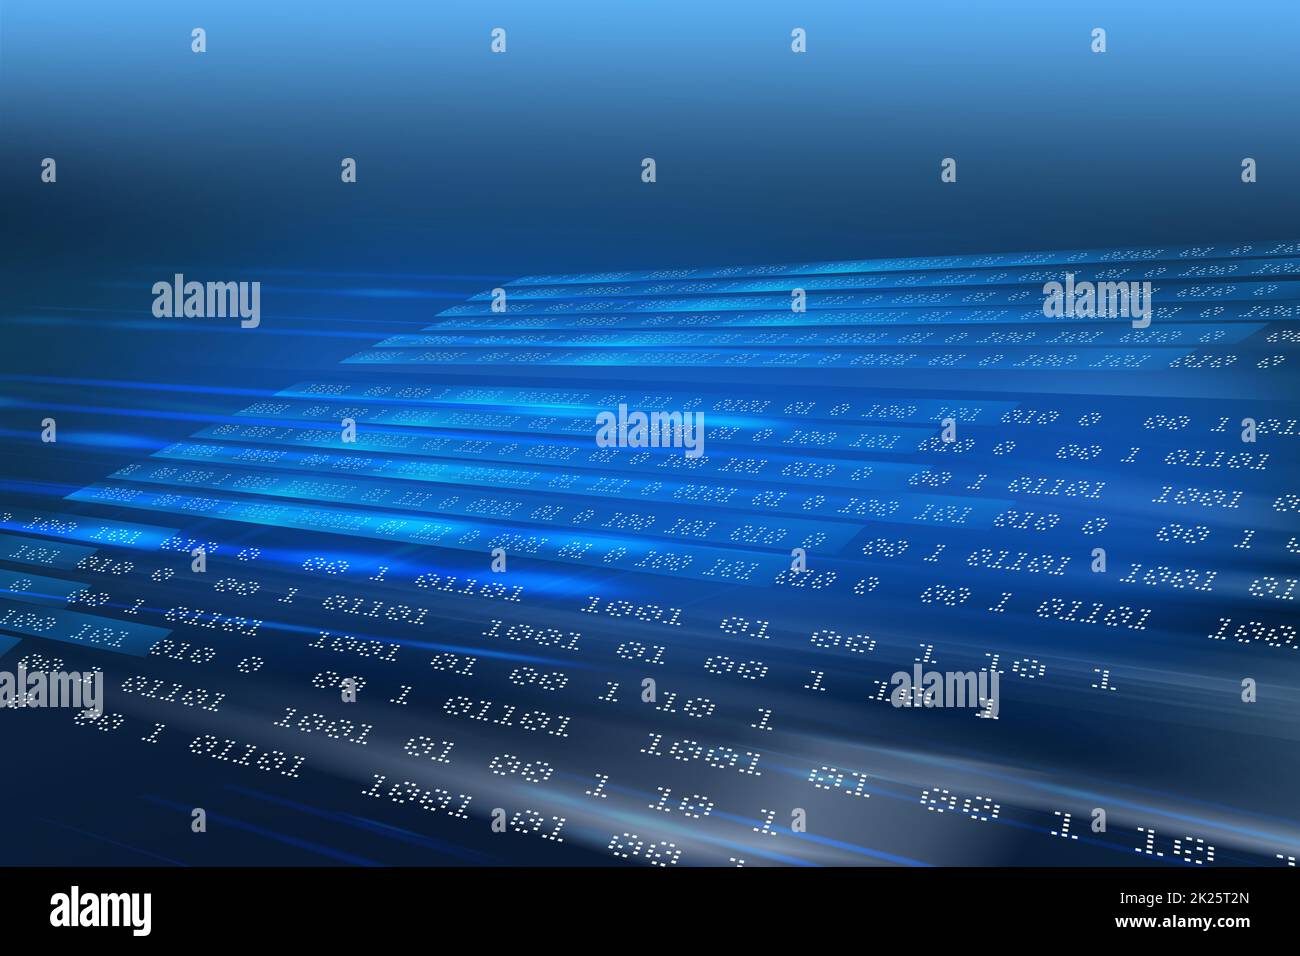 Binary code blue background, digital data transmission concept series 1297 Stock Photo